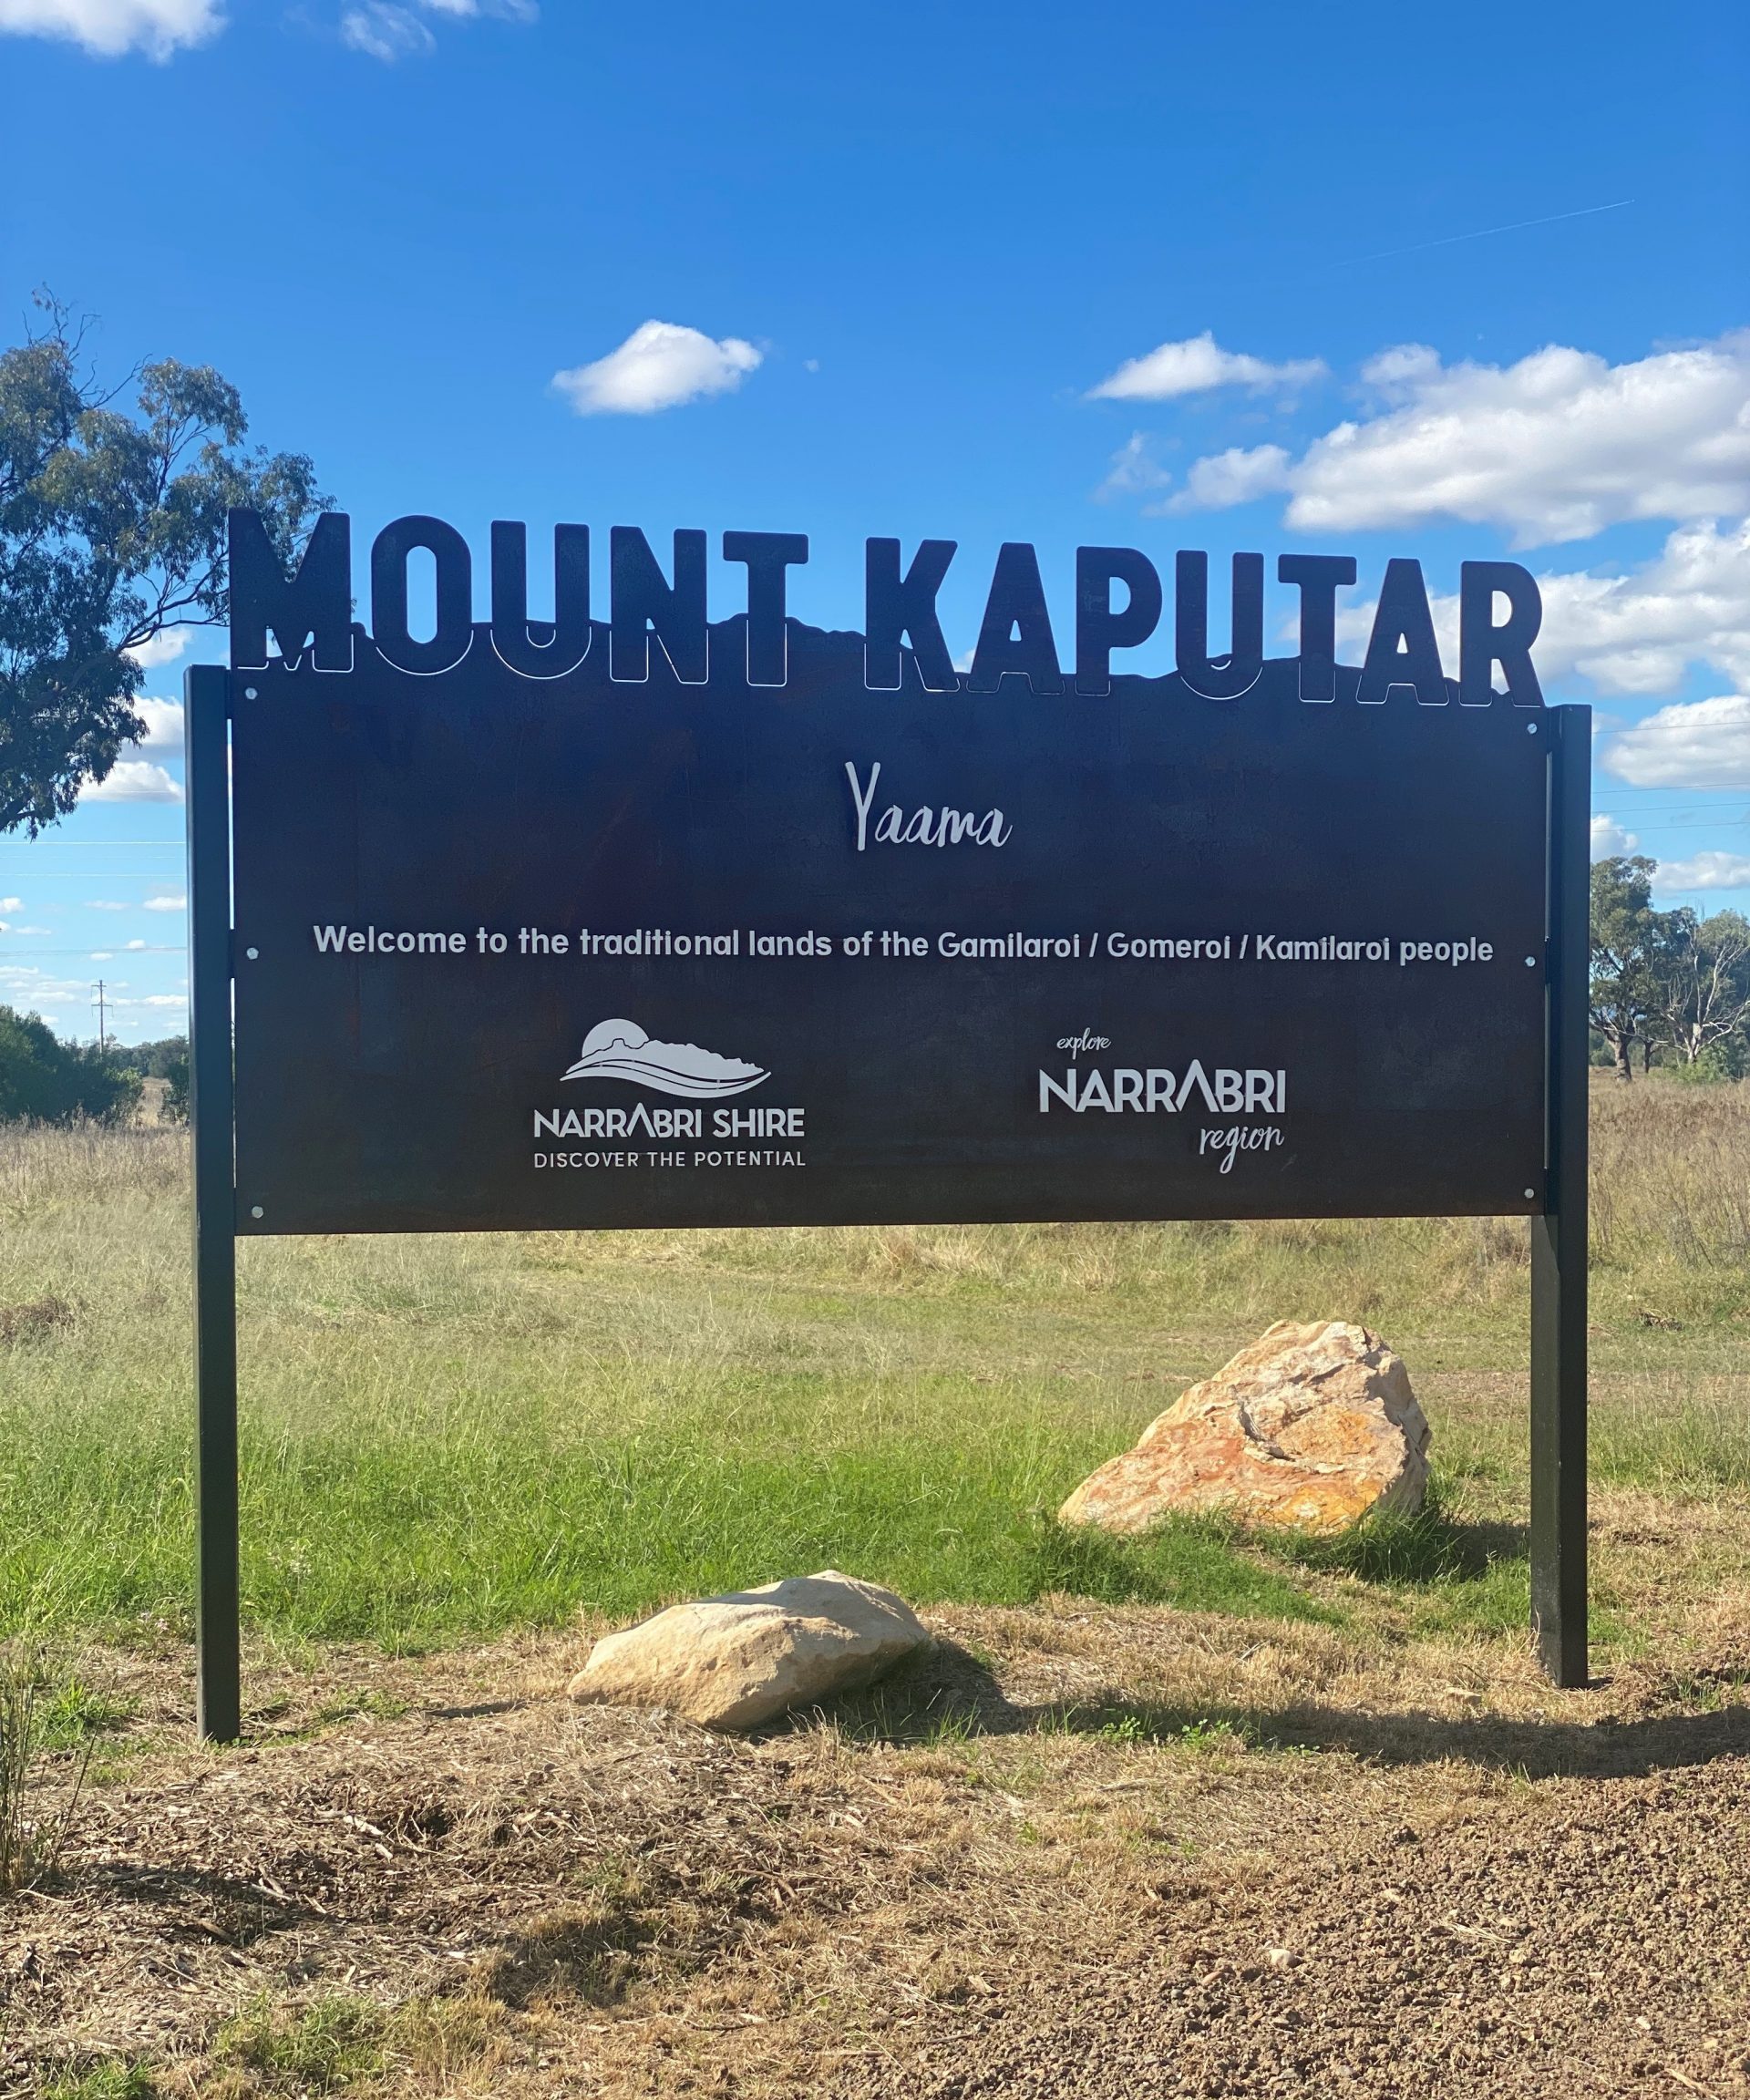 Mount Kaputar signage project set to benefit tourists